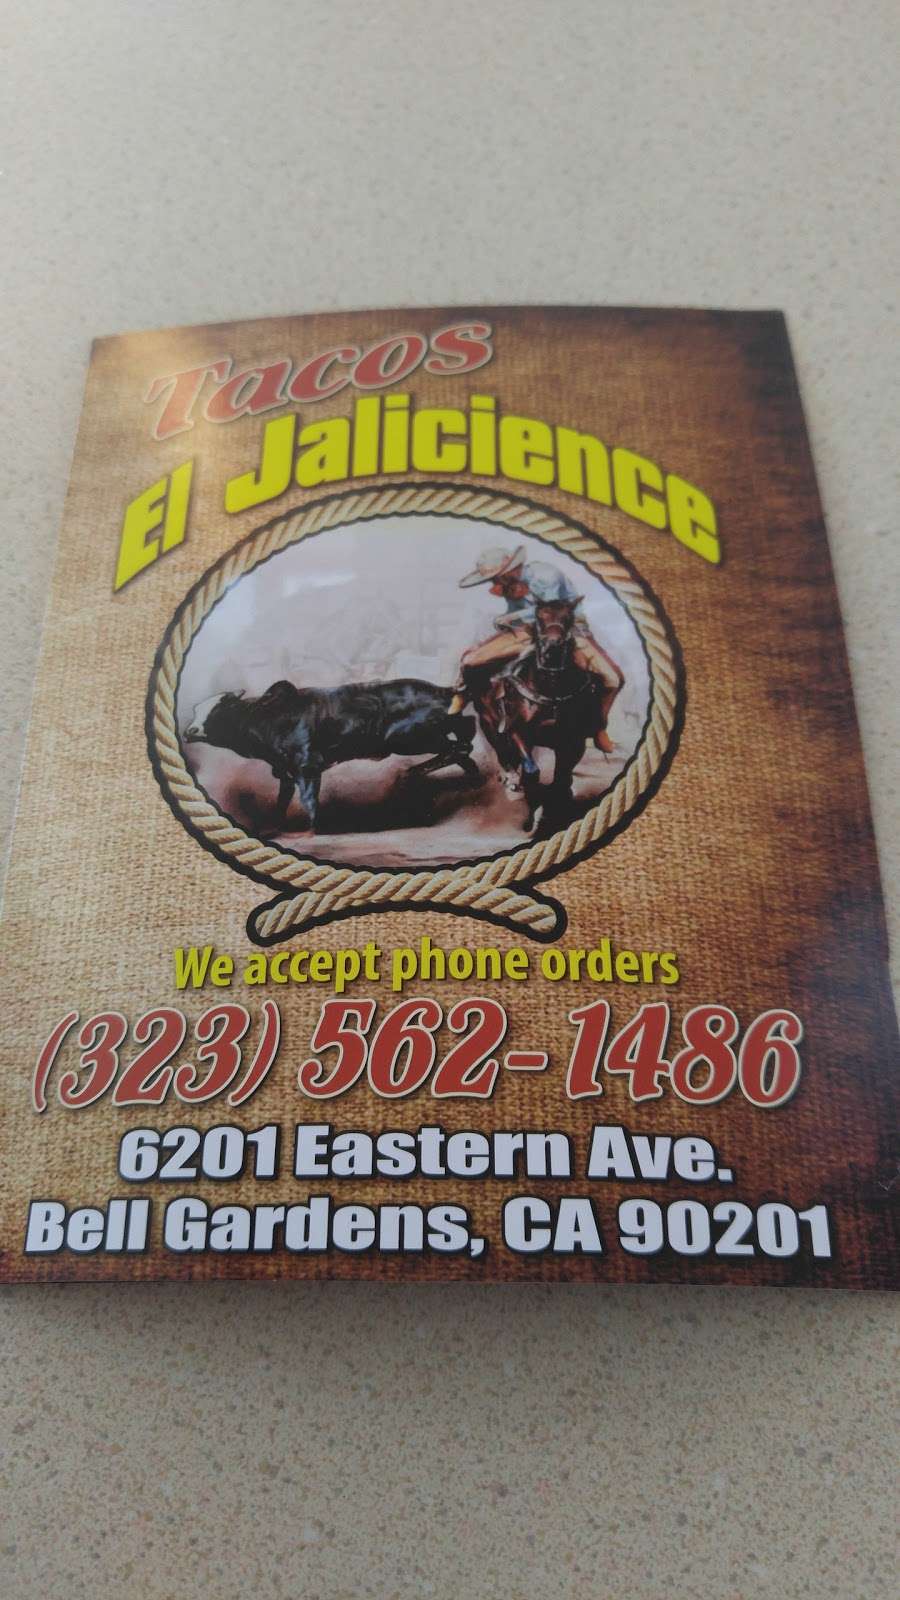 Tacos El Jaliscience | 6201 Eastern Ave, Bell Gardens, CA 90201 | Phone: (323) 562-1486